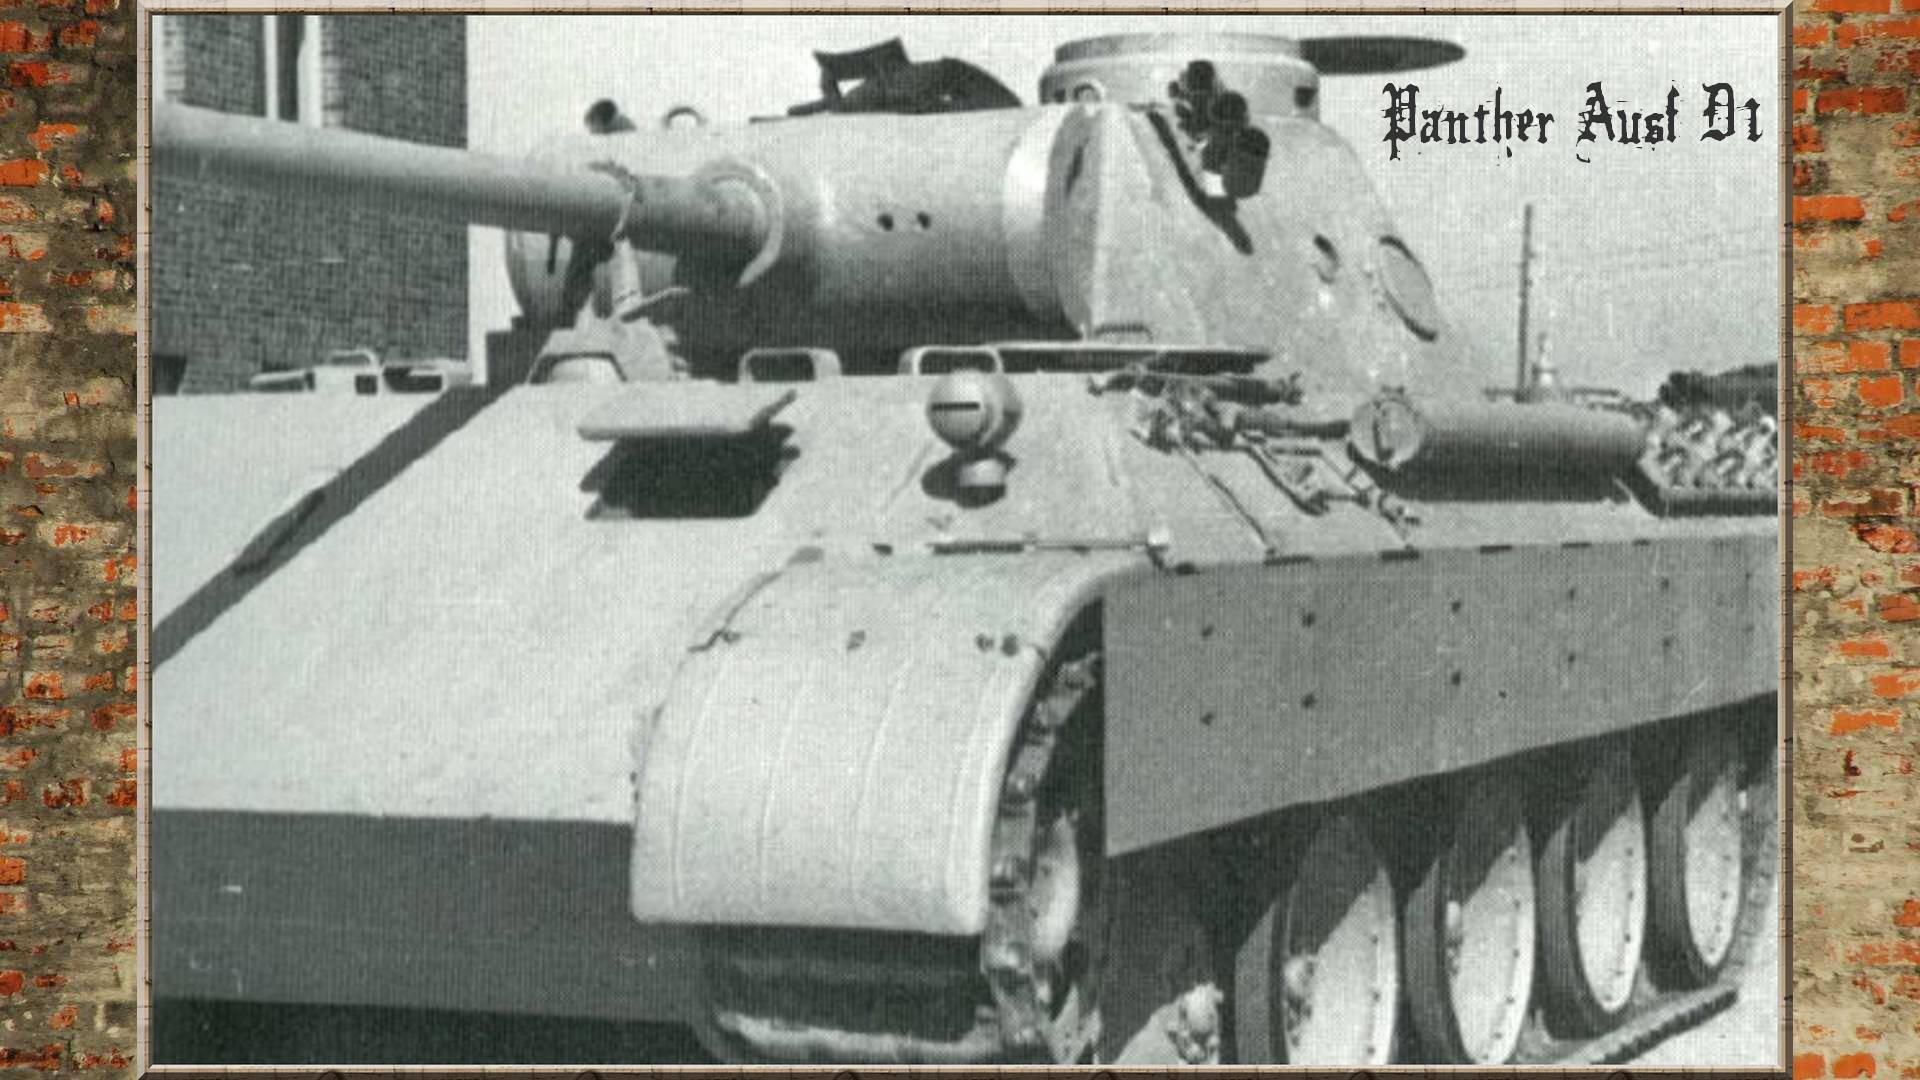 3rd Reich pz5d1 Panther Ausf D1